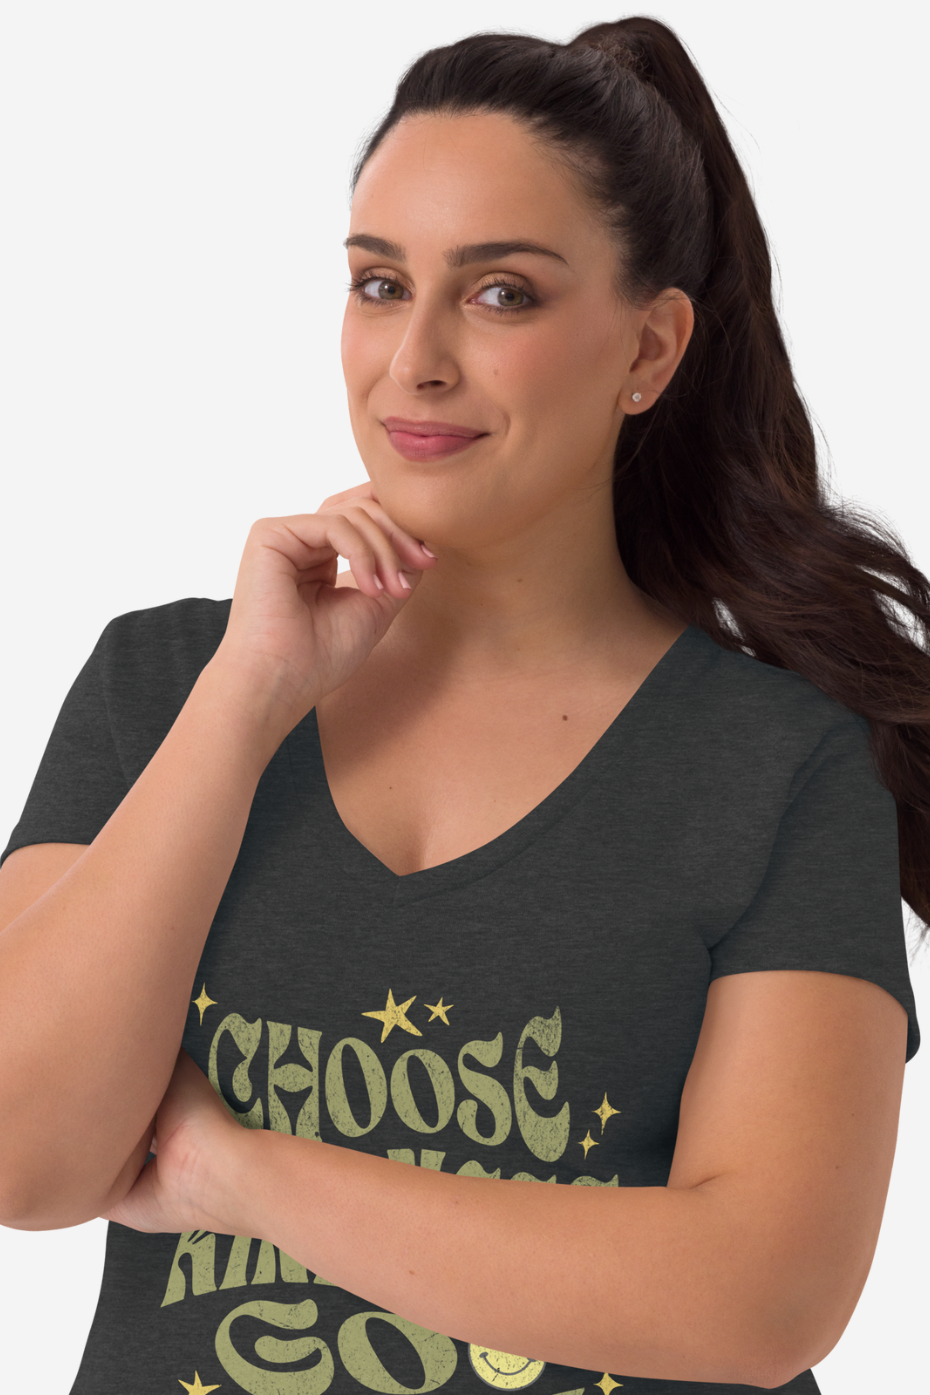 Choose Kindness Women’s recycled v-neck t-shirt